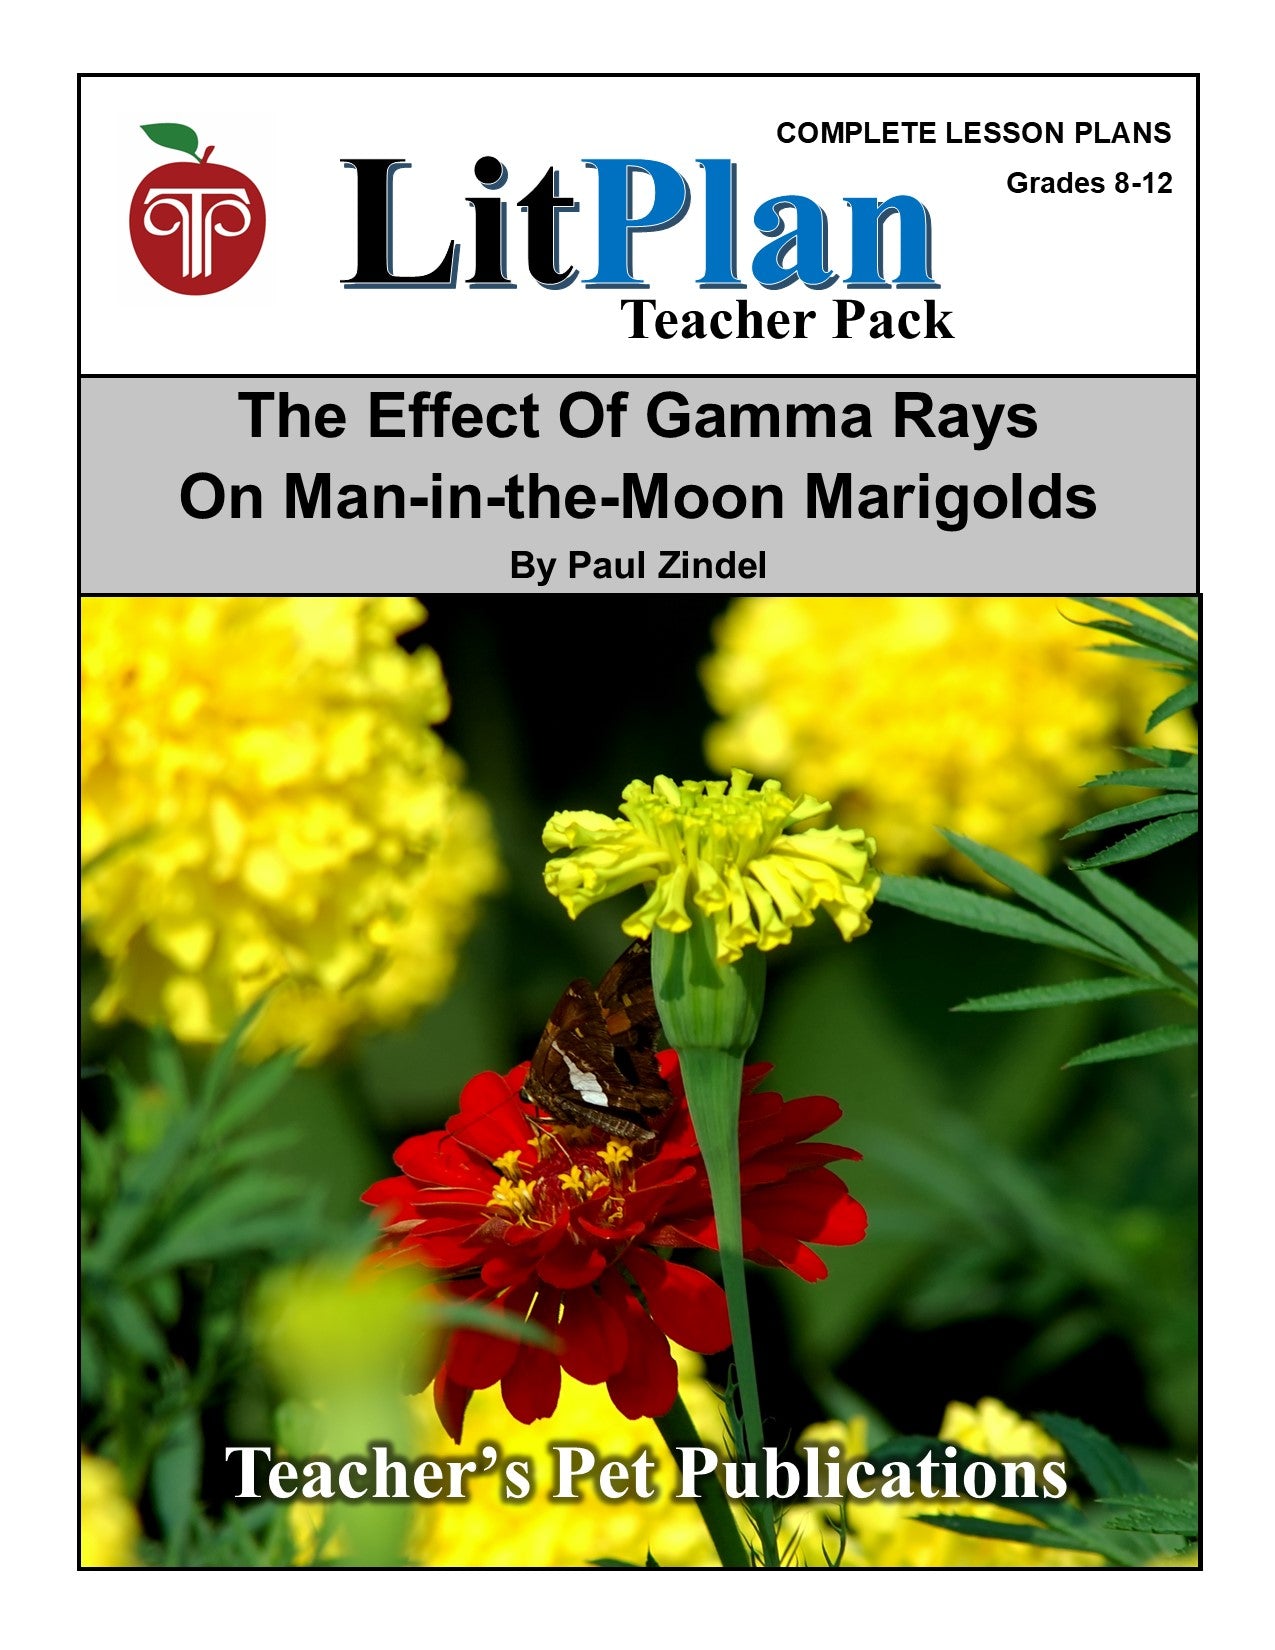 The Effect of Gamma Rays on Man in the Moon Marigolds: LitPlan Teacher Pack Grades 8-12